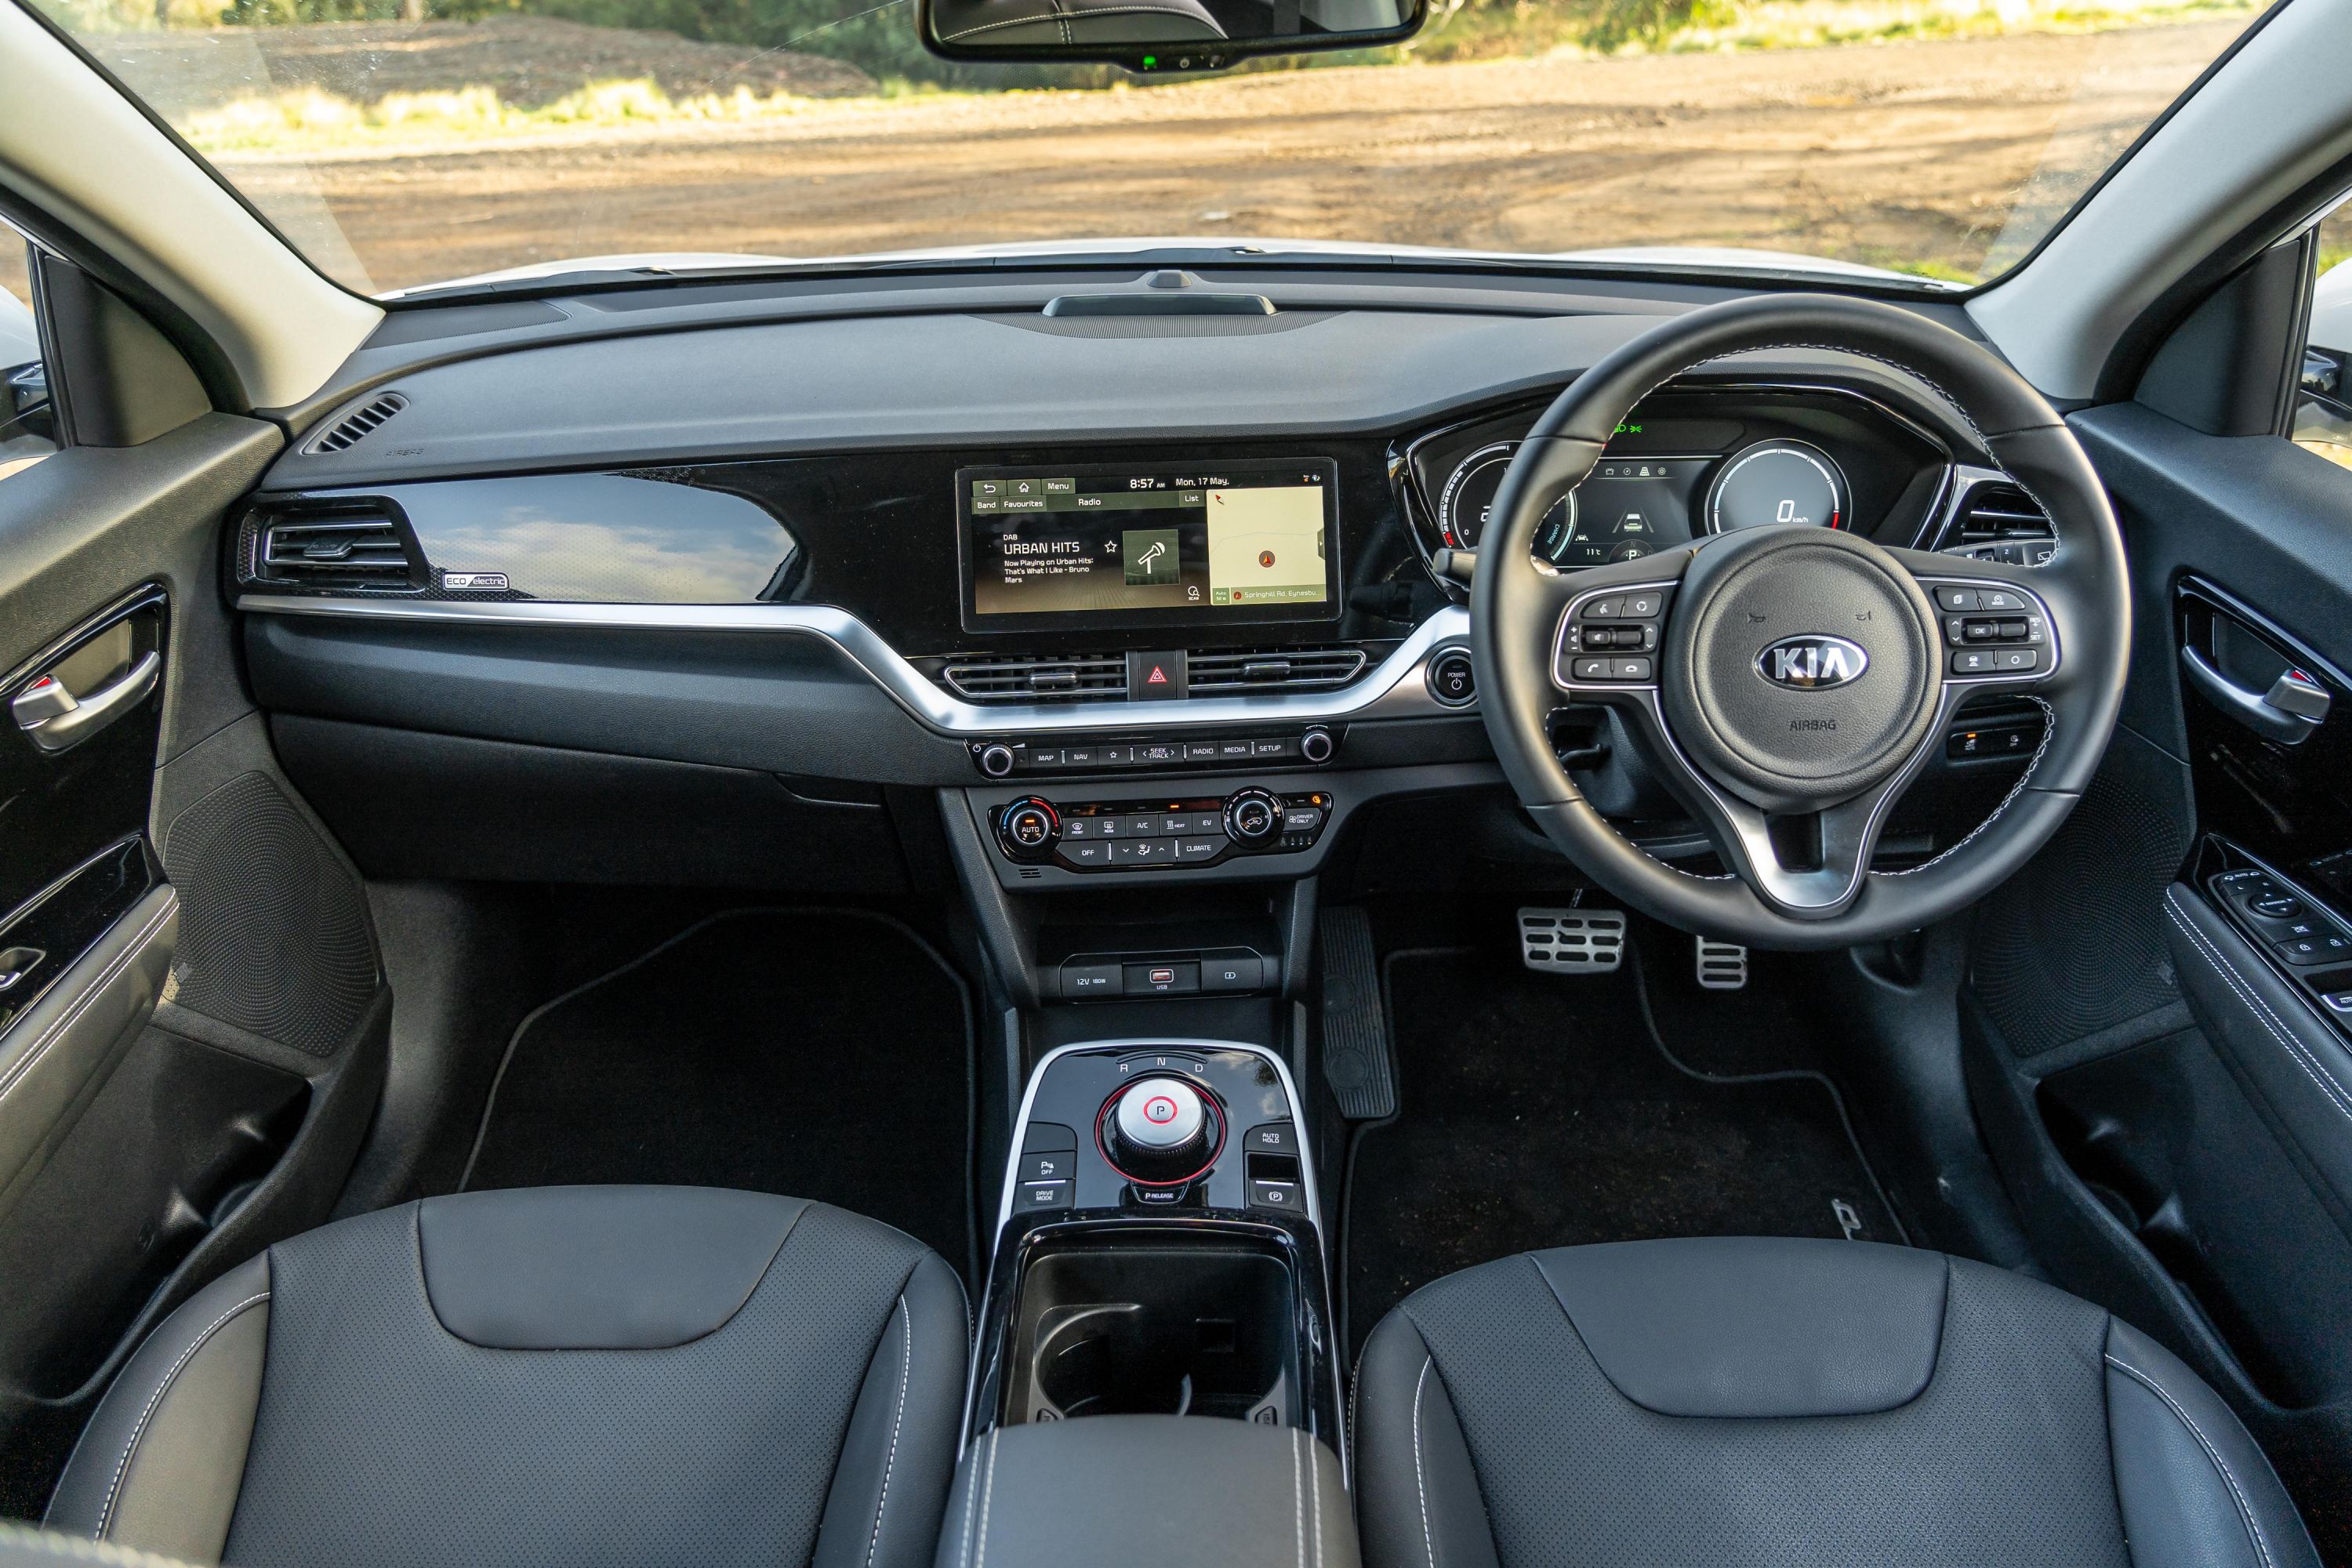 Review: Driving the 2019 Kia Niro EV like a rural American